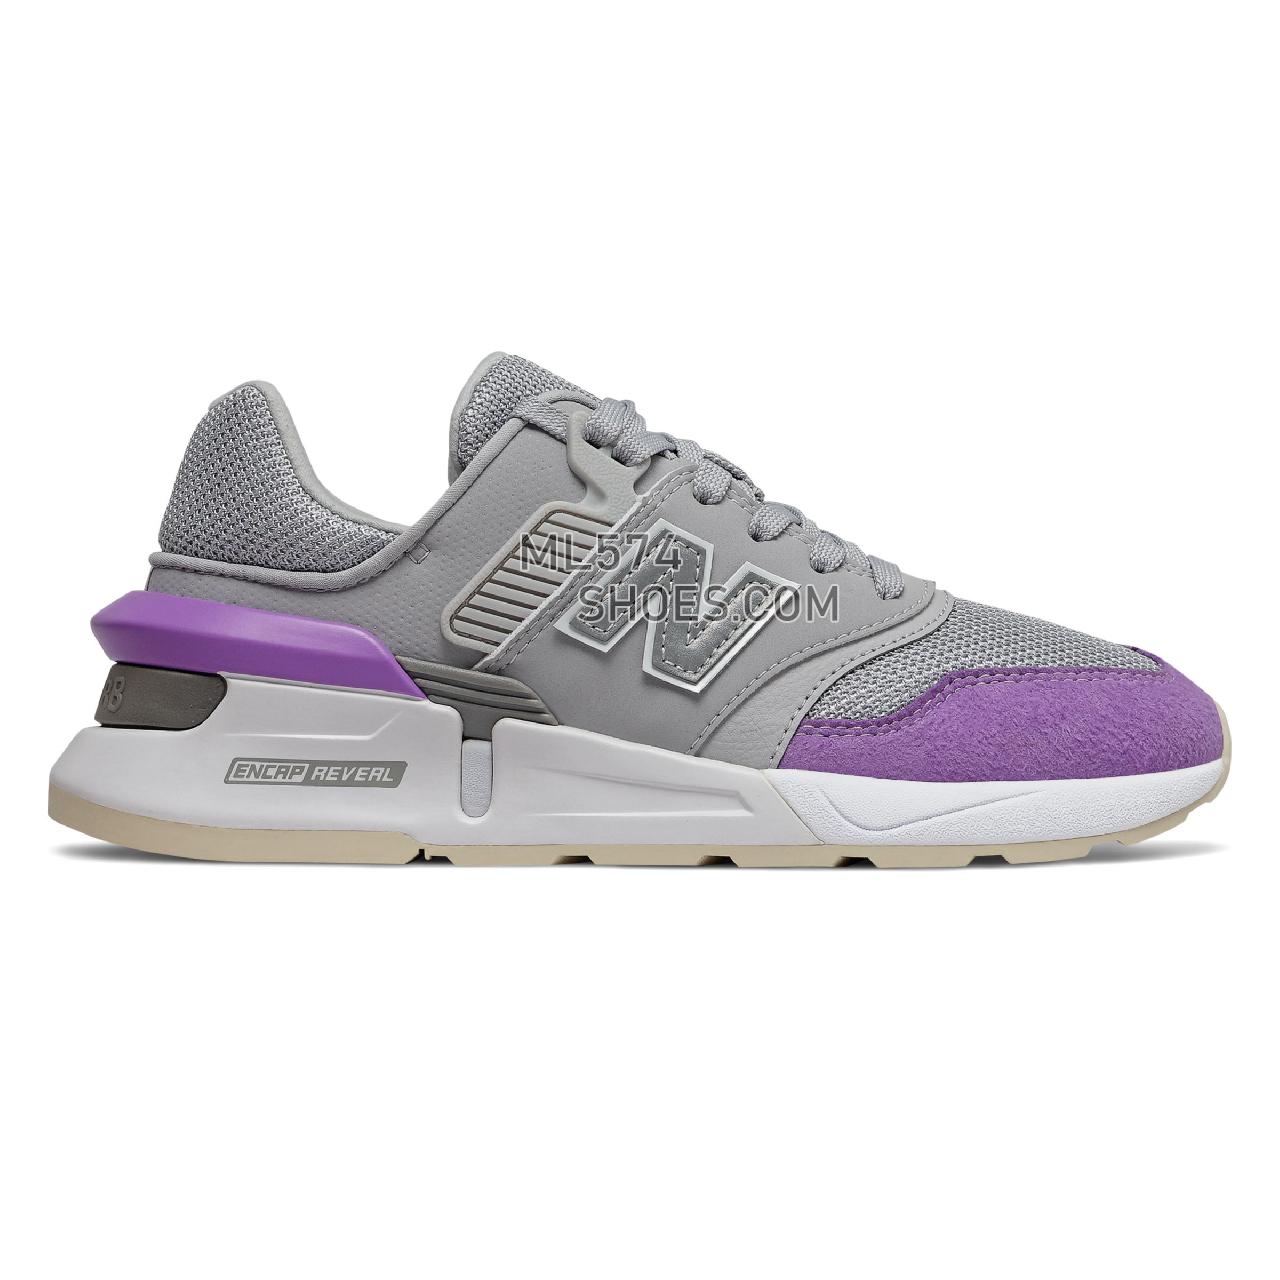 New Balance 997 Sport - Women's Sport Style Sneakers - Light Aluminum with Neo Violet - WS997GFL